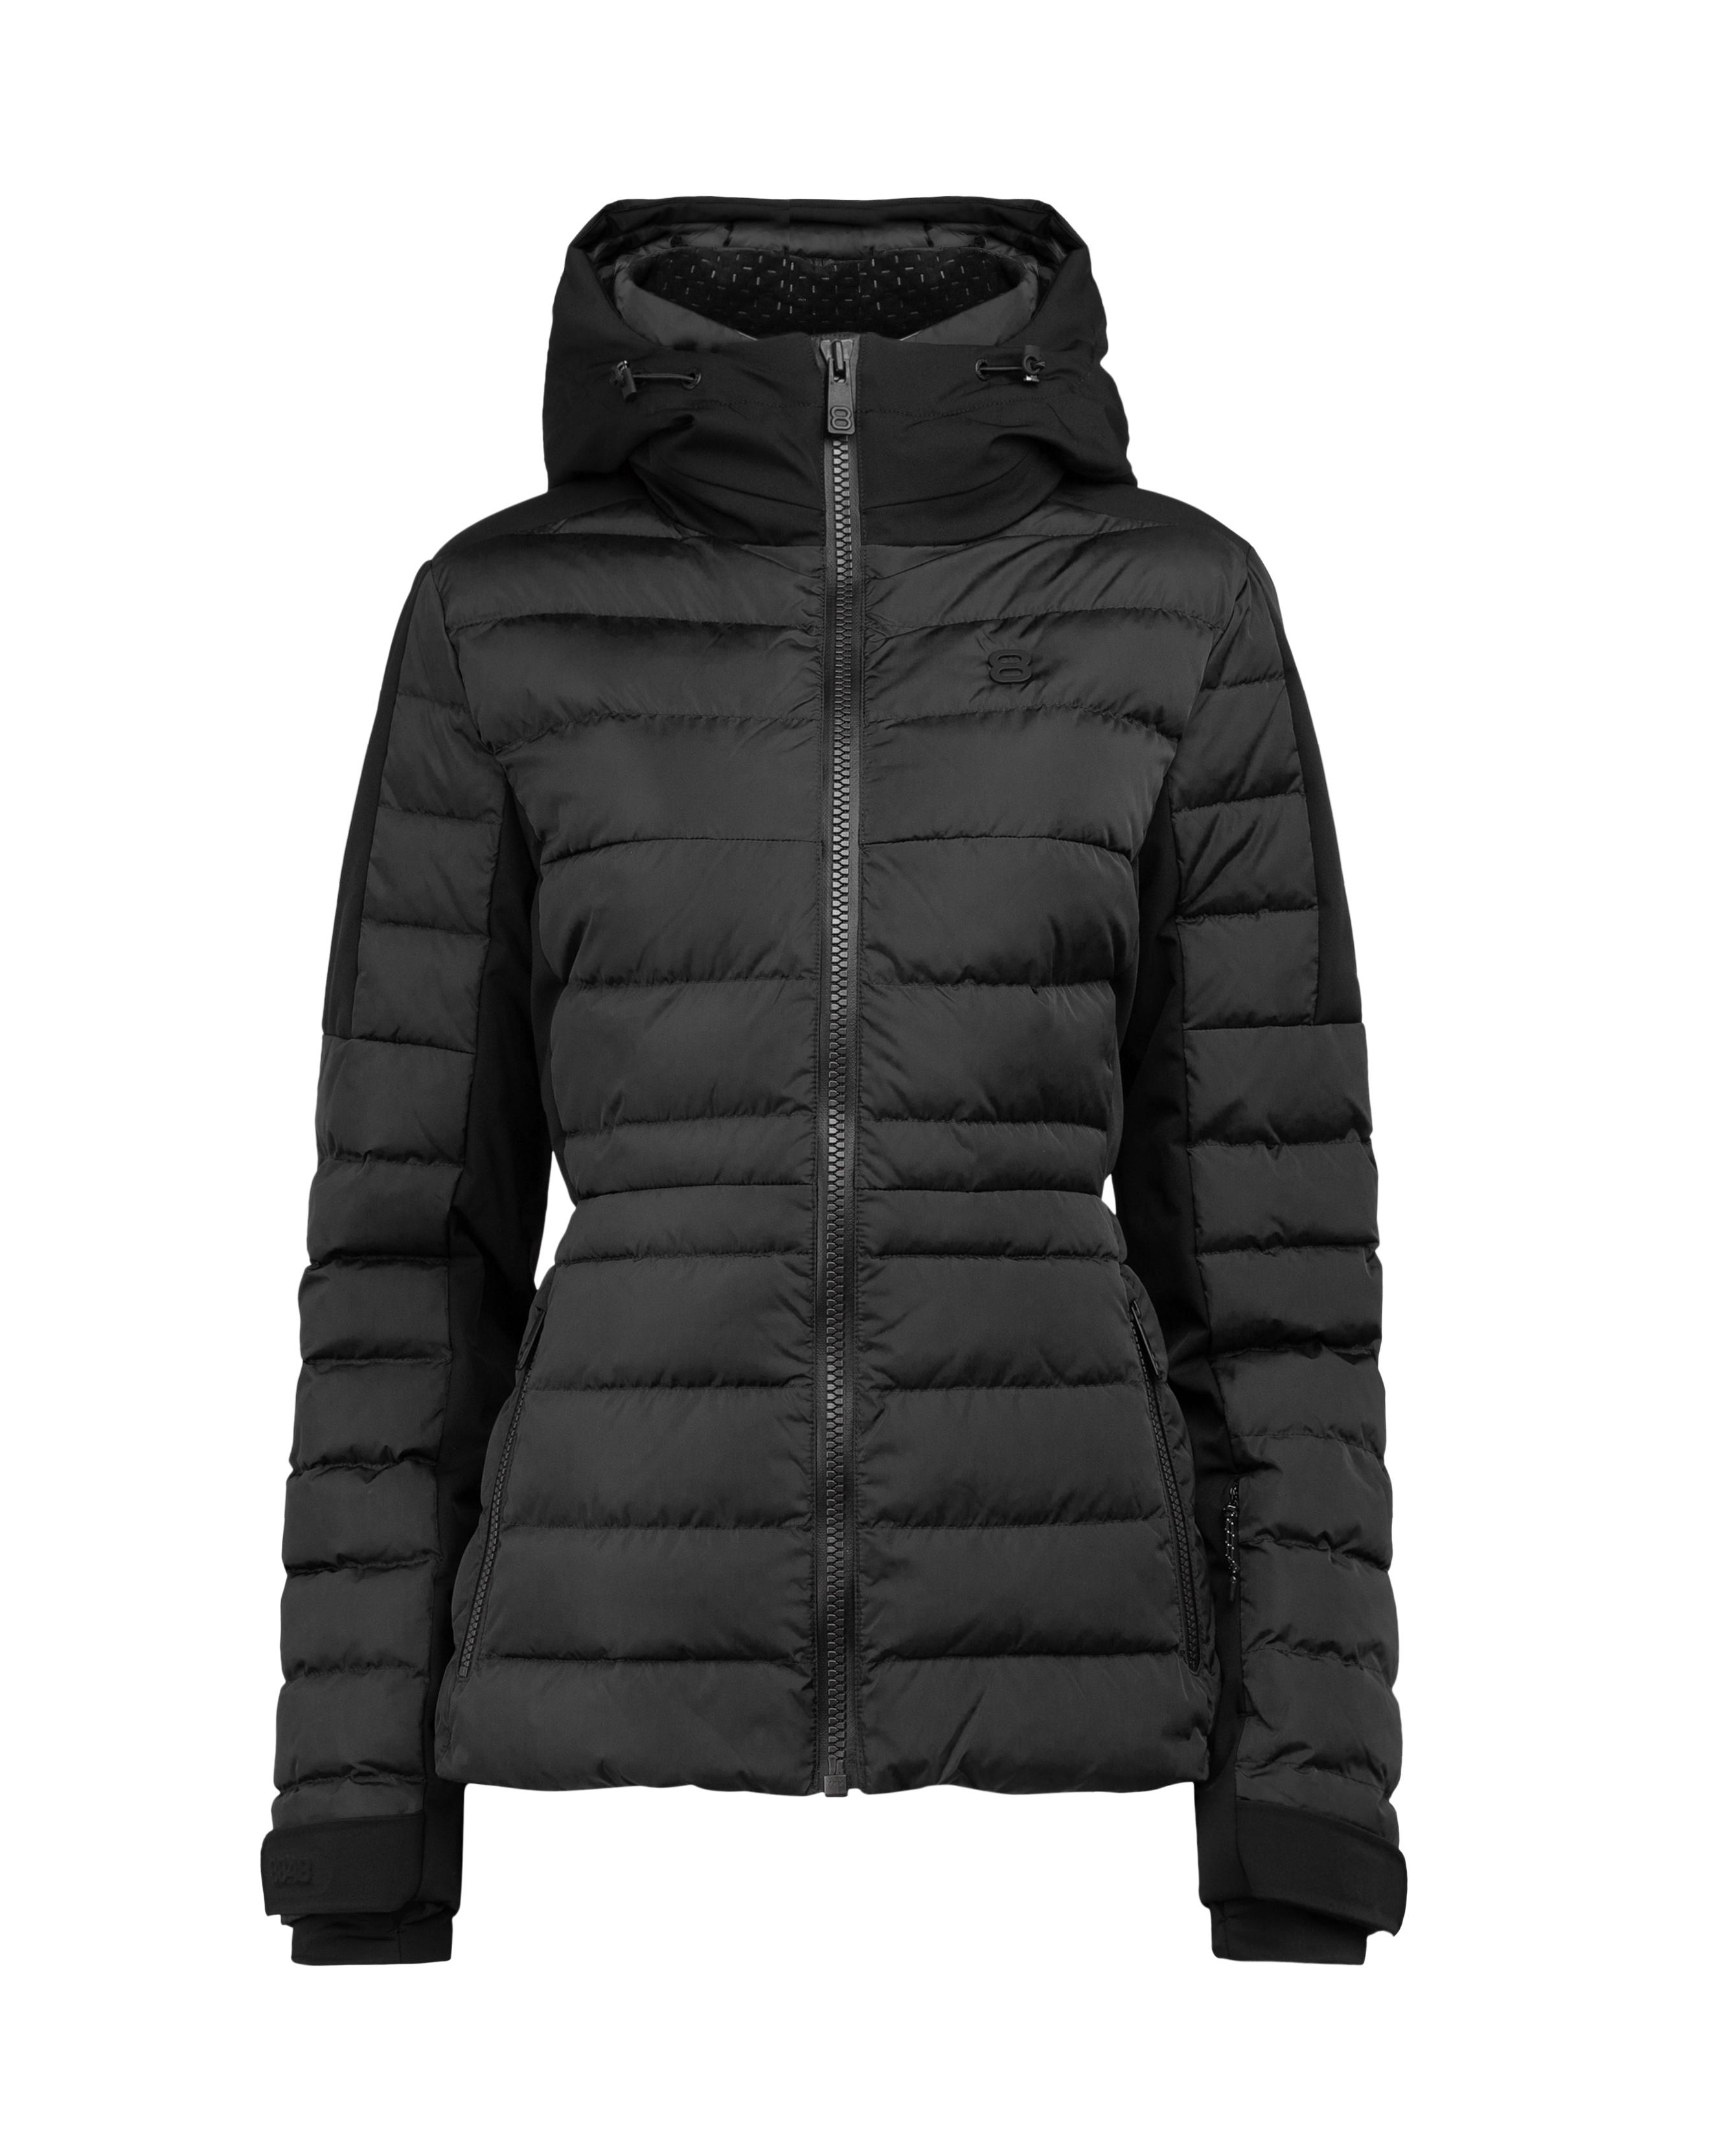 Anoesjka W Jacket Black - Black ski jacket women